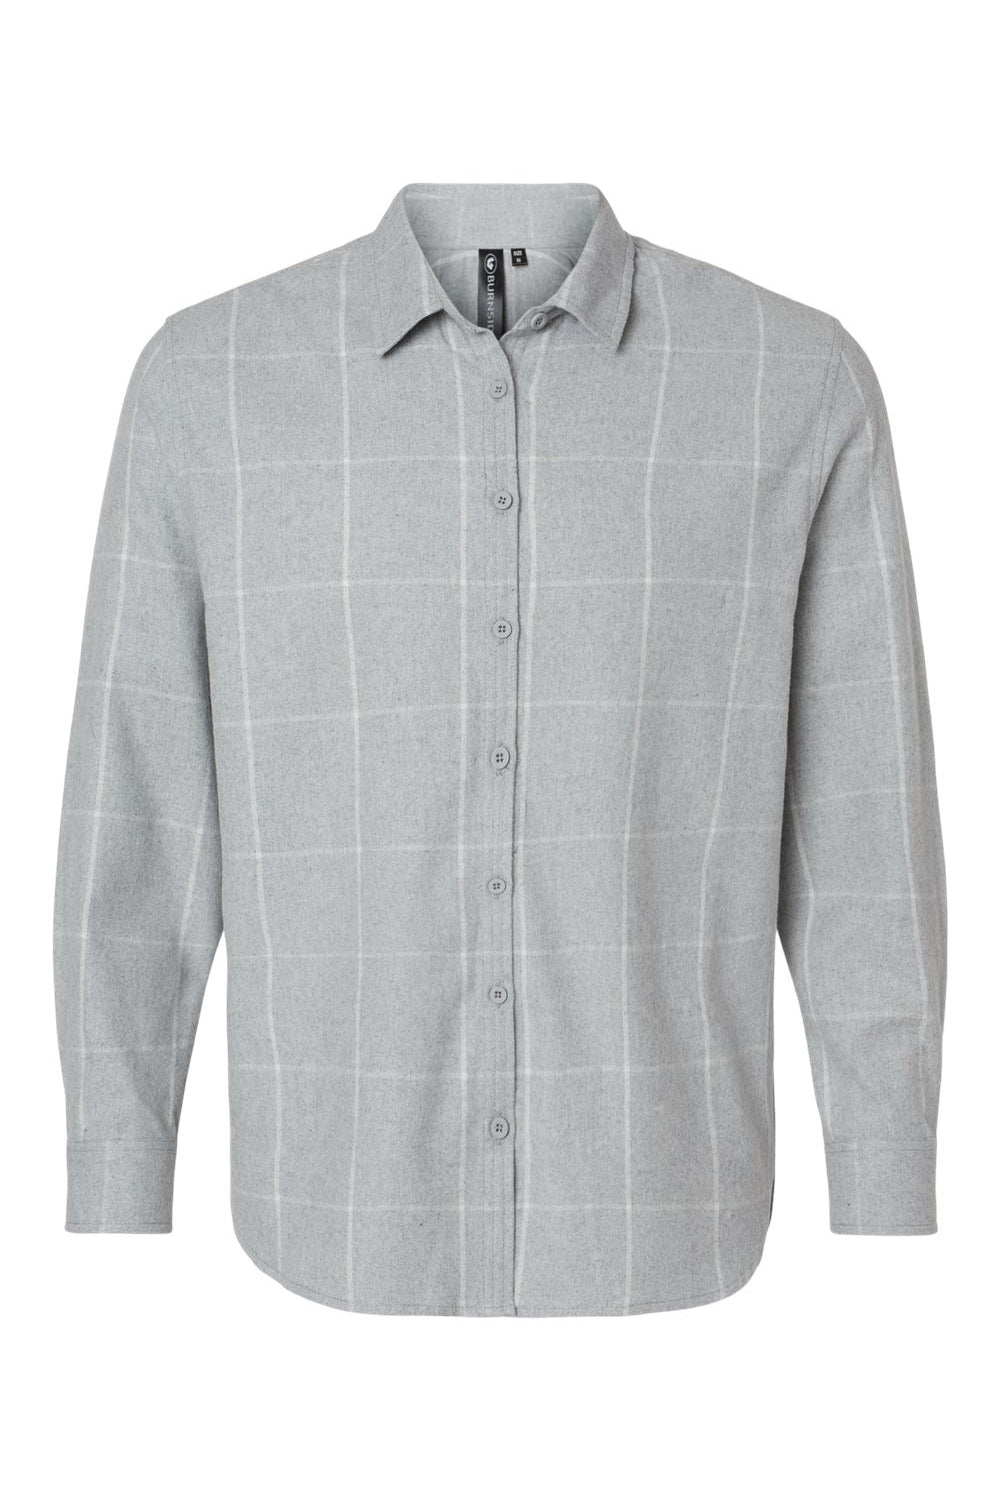 Burnside 5215 Womens Boyfriend Flannel Long Sleeve Button Down Shirt Grey/White Flat Front